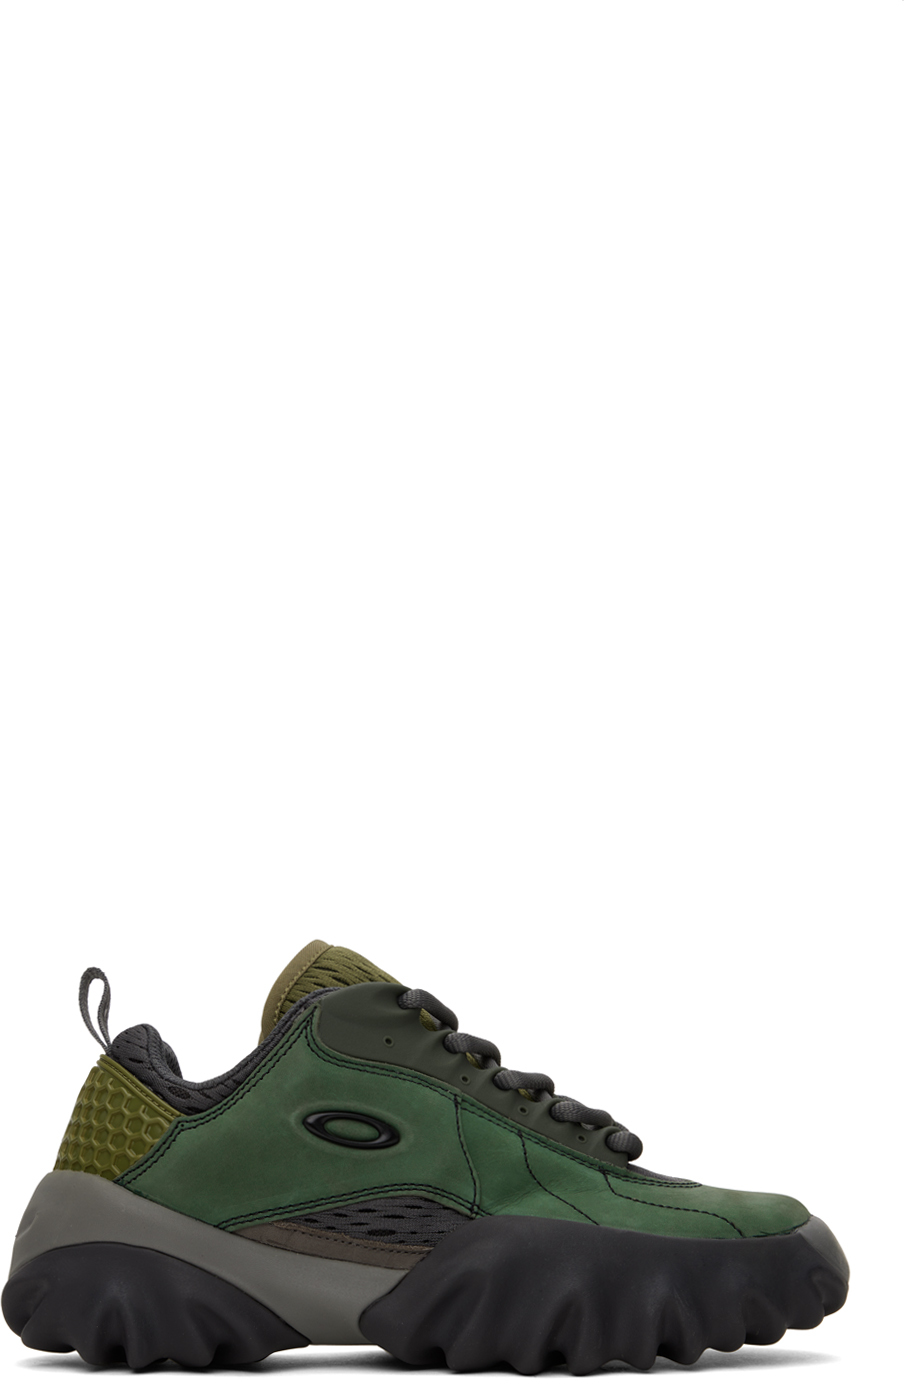 Oakley Factory Team: Green & Gray Chop Saw Sneakers | SSENSE